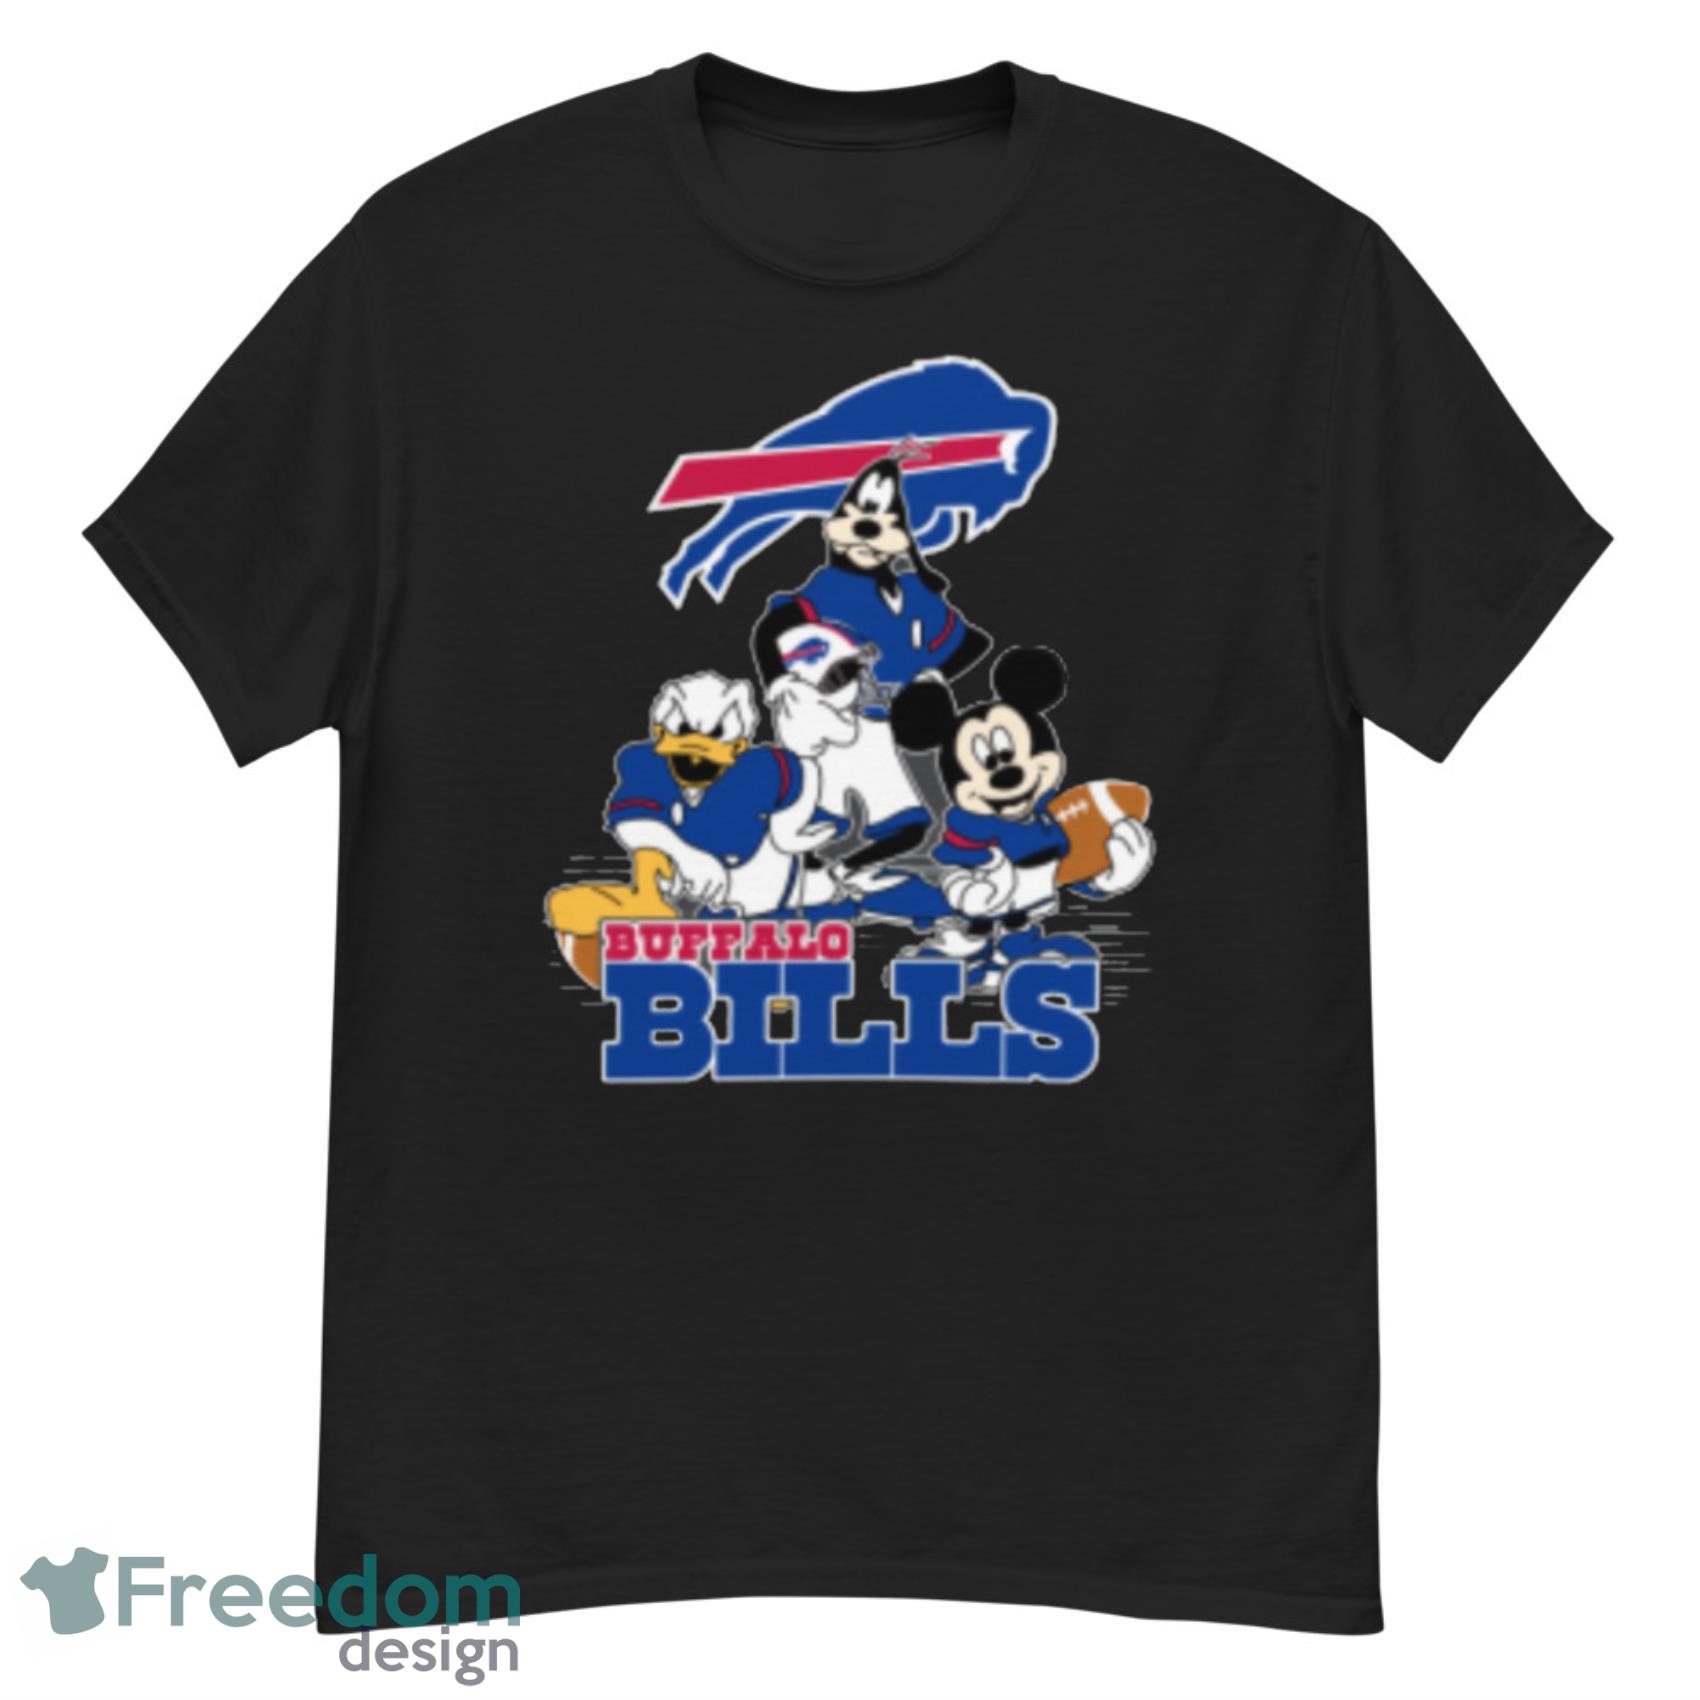 Buffalo Bills NFL Team Apparel Graphic T-Shirts S-2XL - The ICT